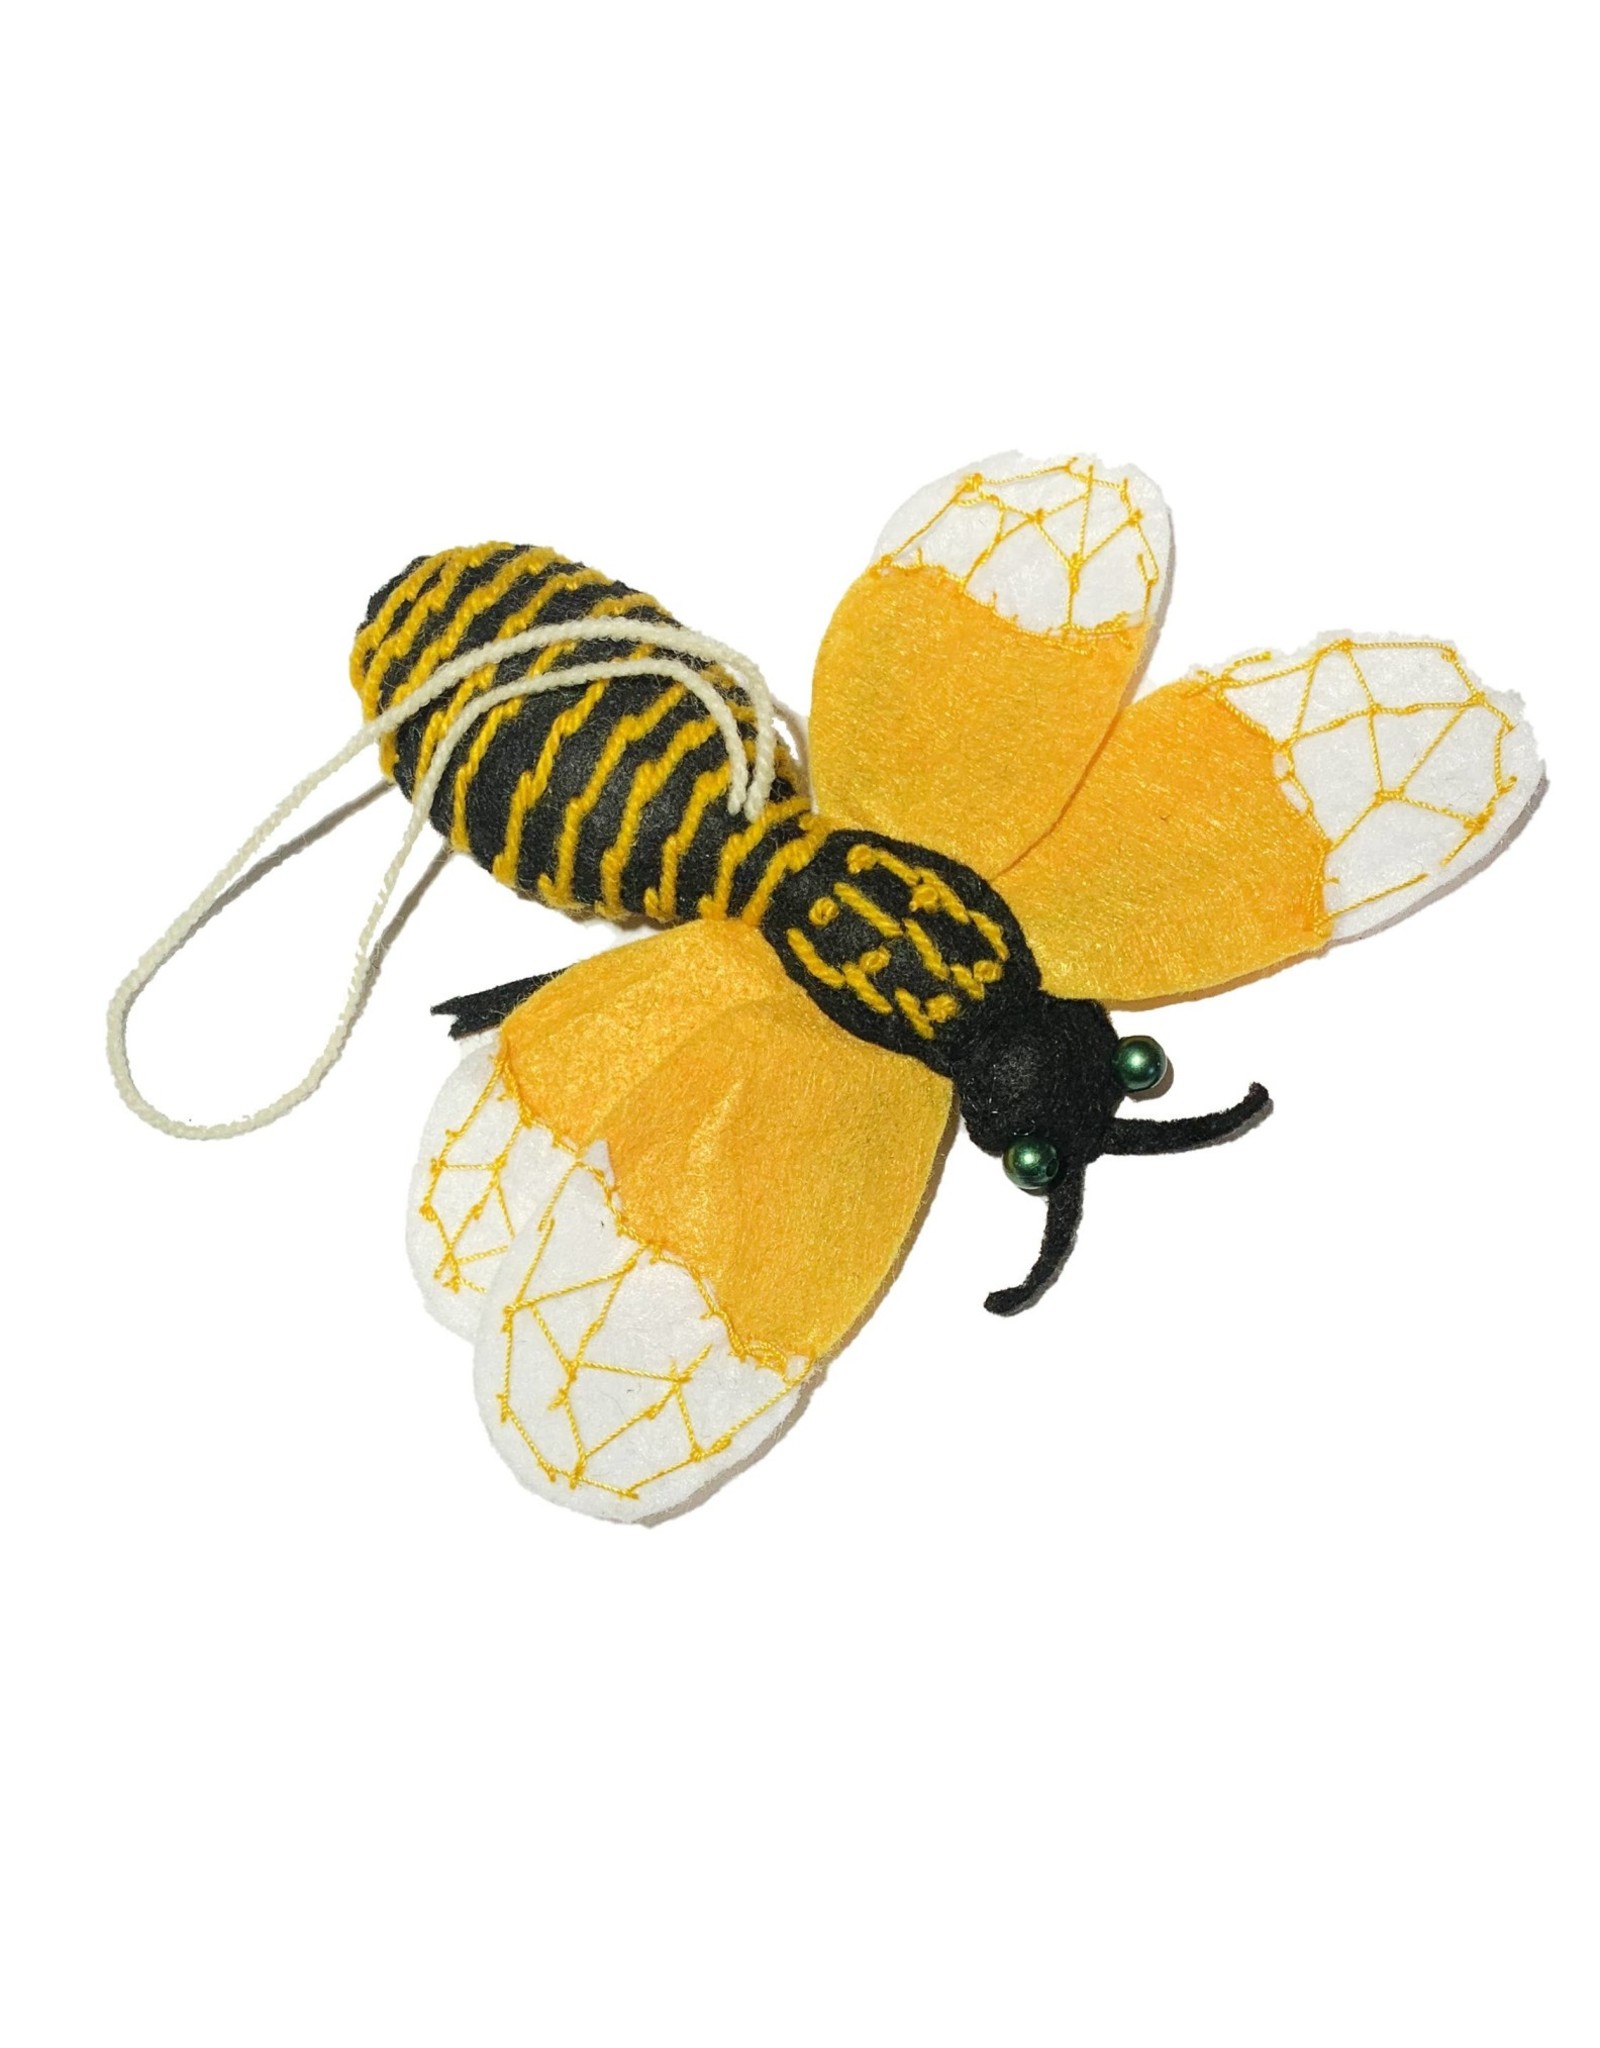 Silk Road Bazaar Bumblebee Ornament